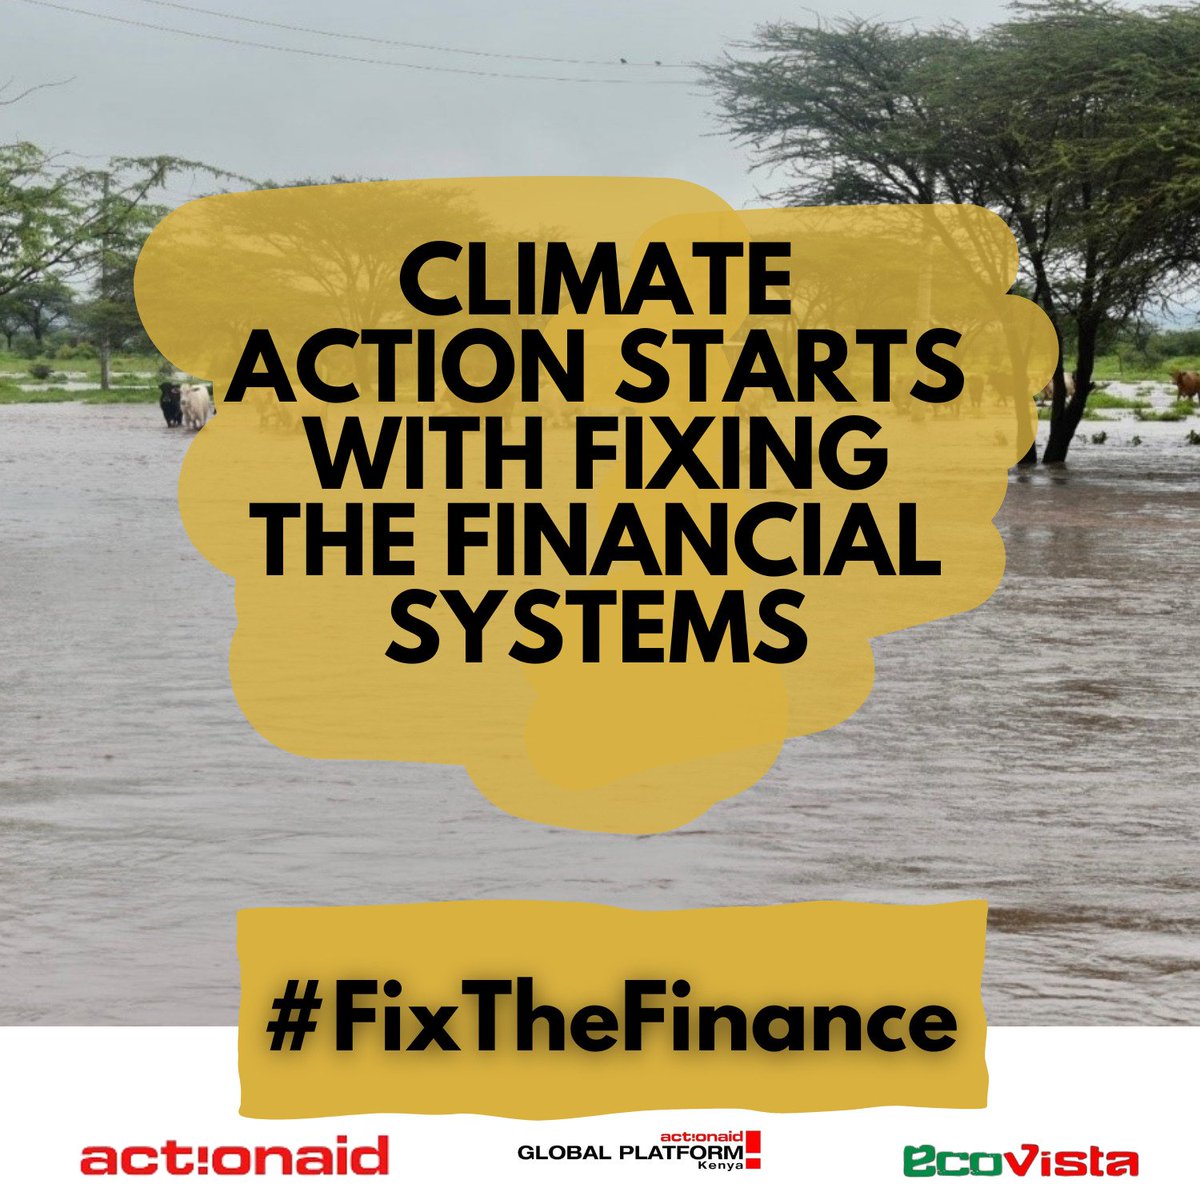 Taxation of the Super-Rich will be a solution. #FixTheFinance 
Tracking Climate Finance 
@ActionAid @ActionAid_Kenya @GP_Kenya @PlatformsGlobal @COP29_Az @Barclays, @HSBC, @HSBC_UK @Citi @christian_aid @Oxfam @Fridays4Future